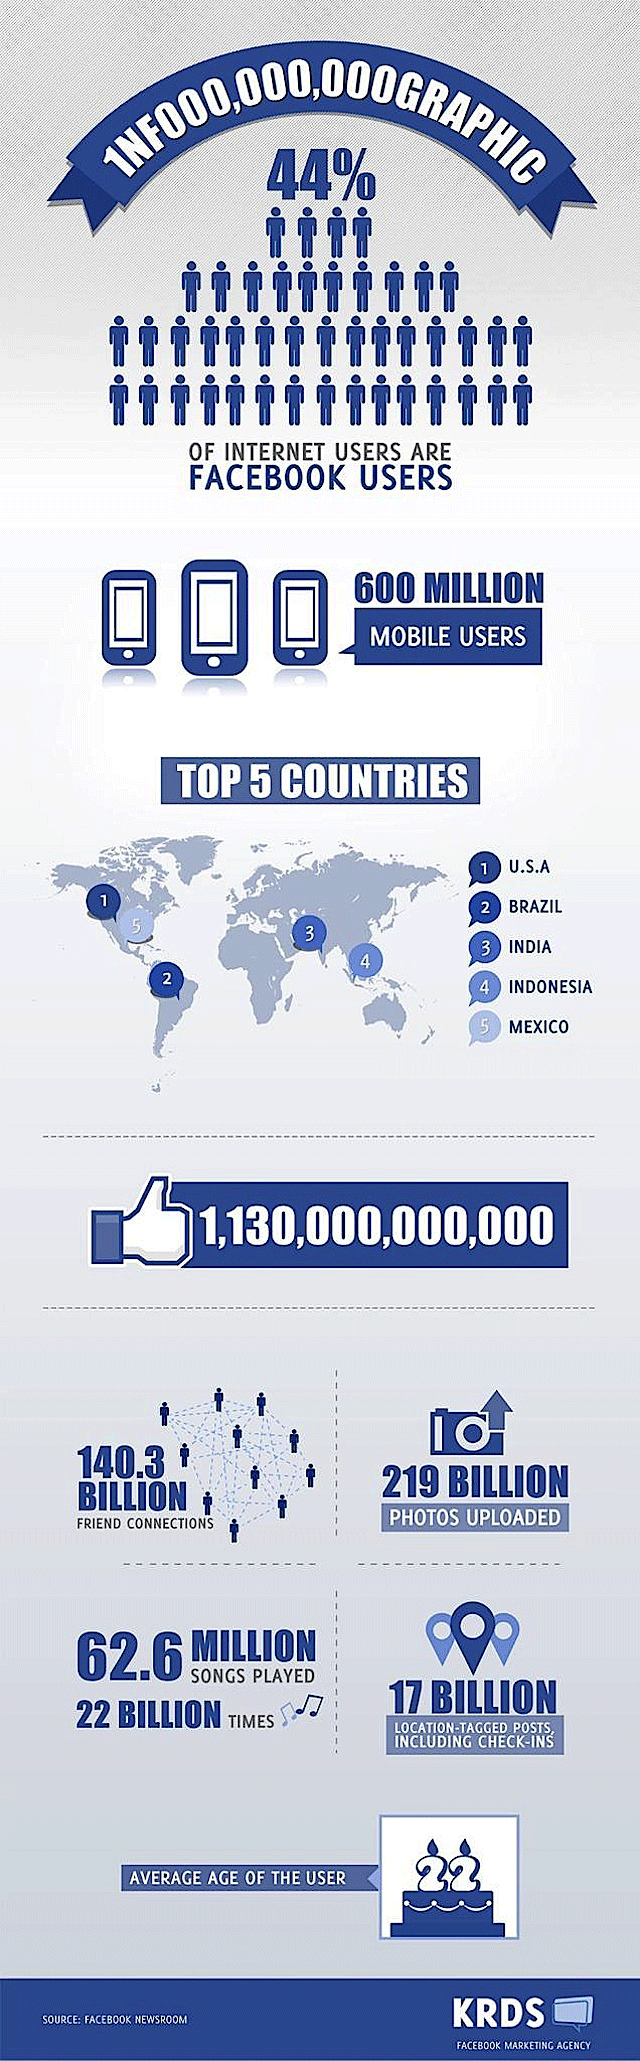 Facebook-infographic-1-billion